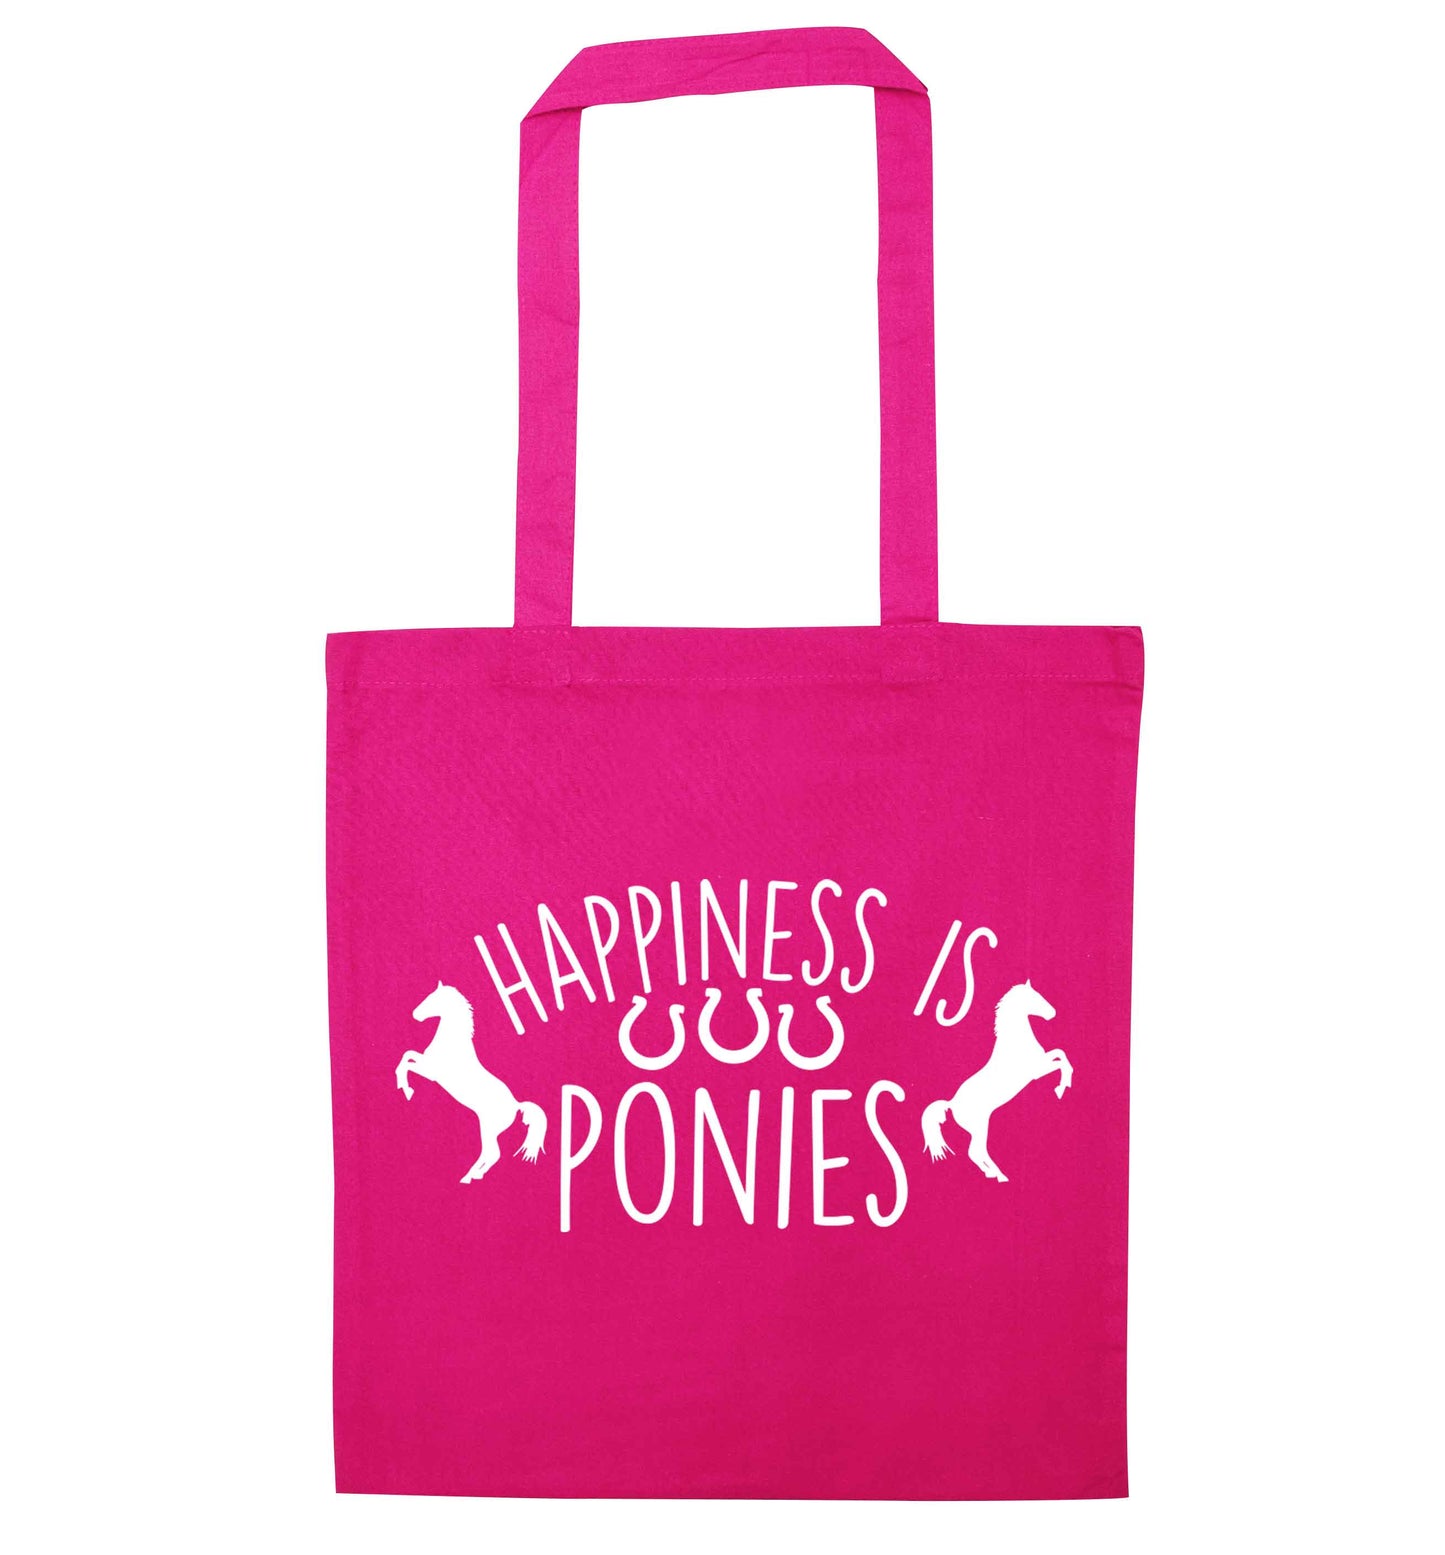 Happiness is ponies pink tote bag